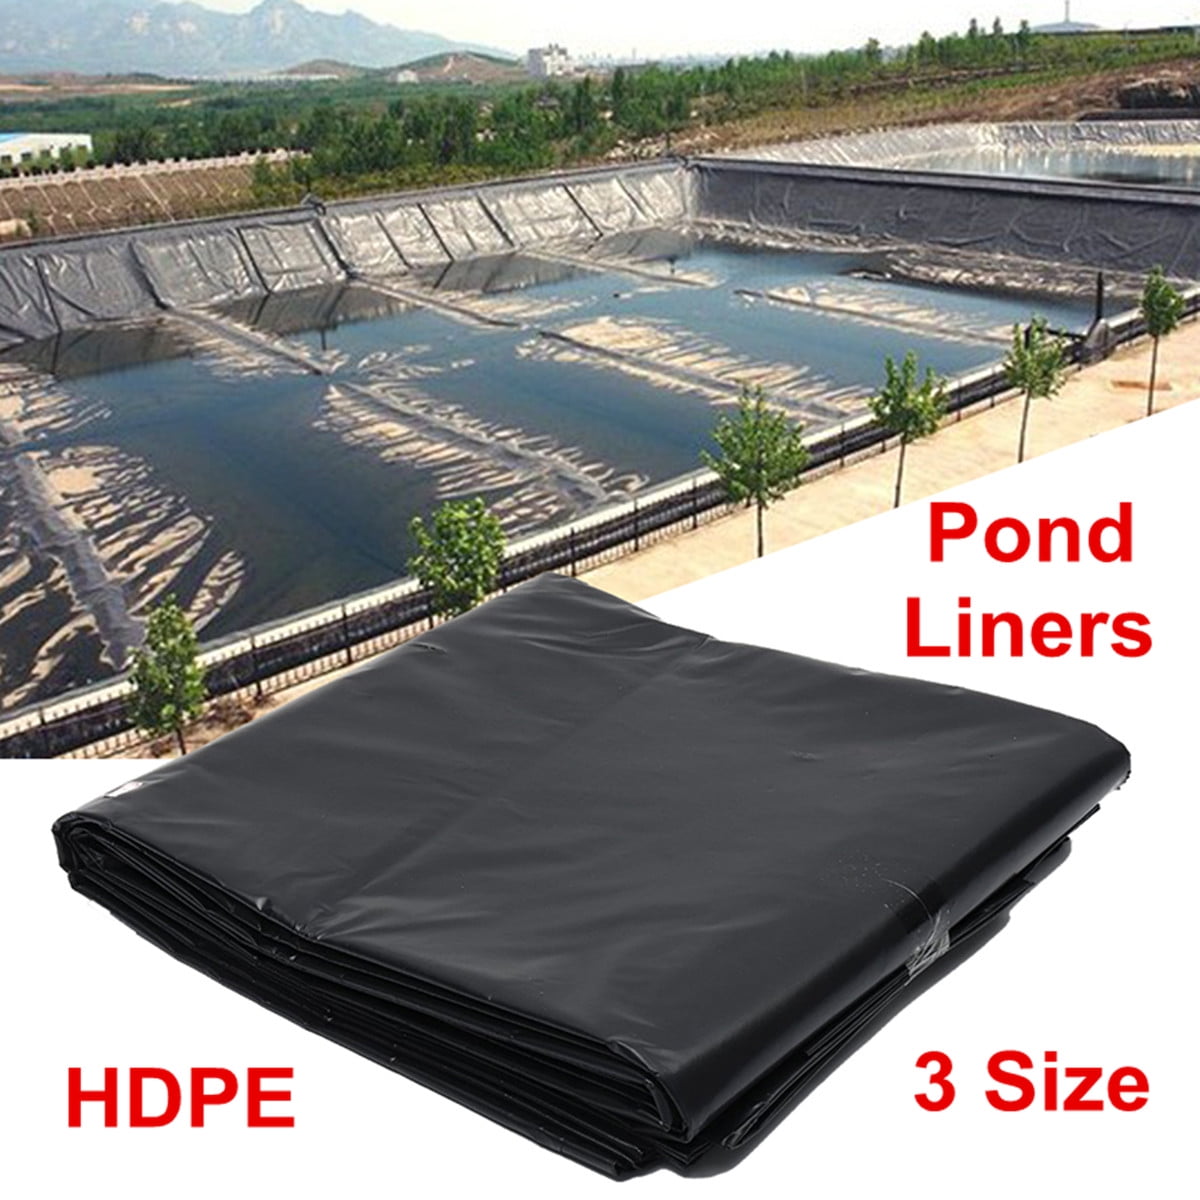 Pond Liner HDPE Rubber Black Pond Skins 2x3m 3x5m 4x7m 5x8m 6x10m 7x7m 8x10m 11x12m Waterproof Garden Pool Membrane for Koi Ponds Streams Fountains 